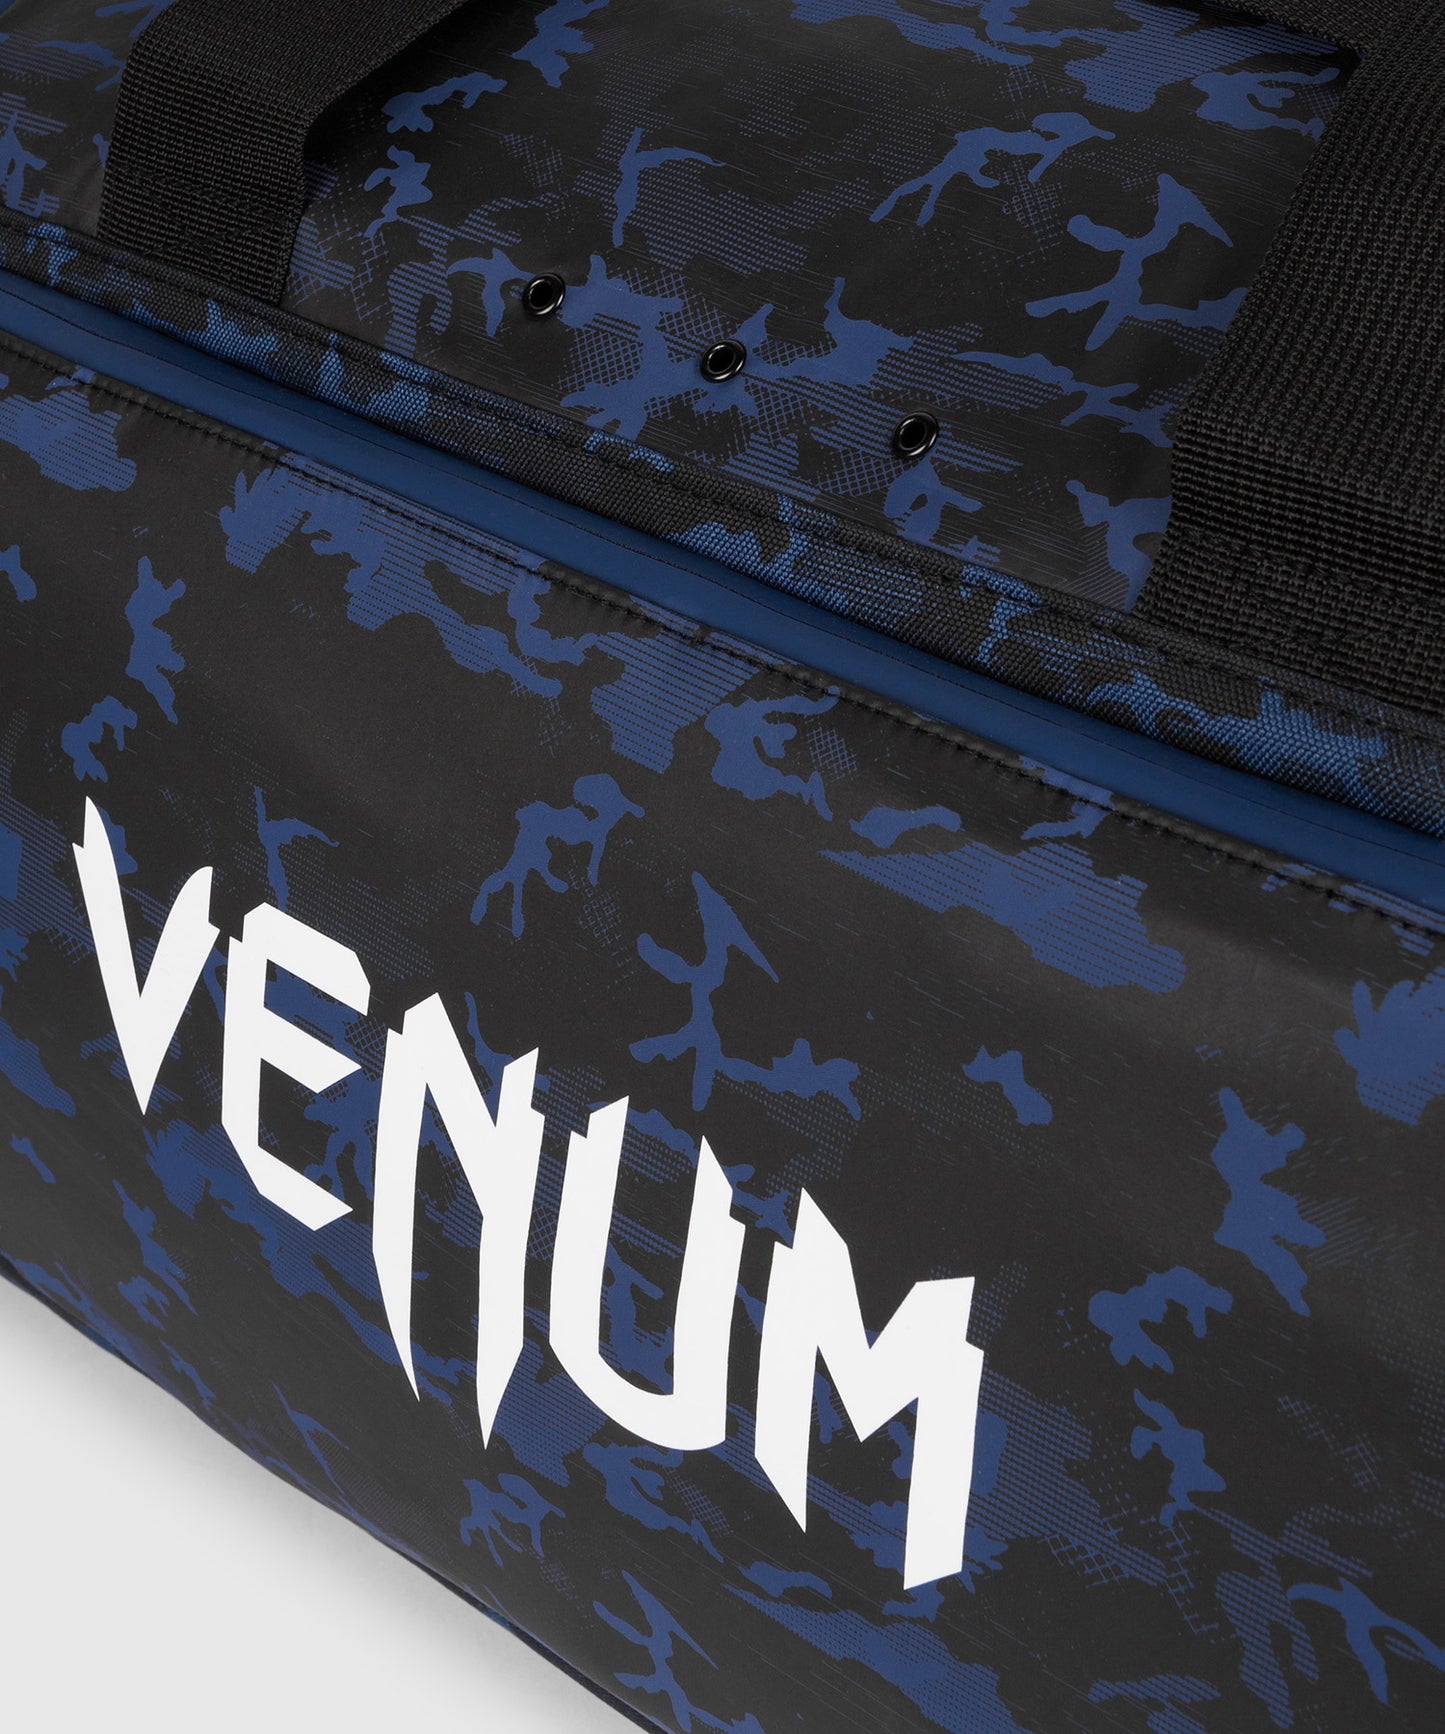 Venum Trainer Lite Evo Sports Bags - Blue/White